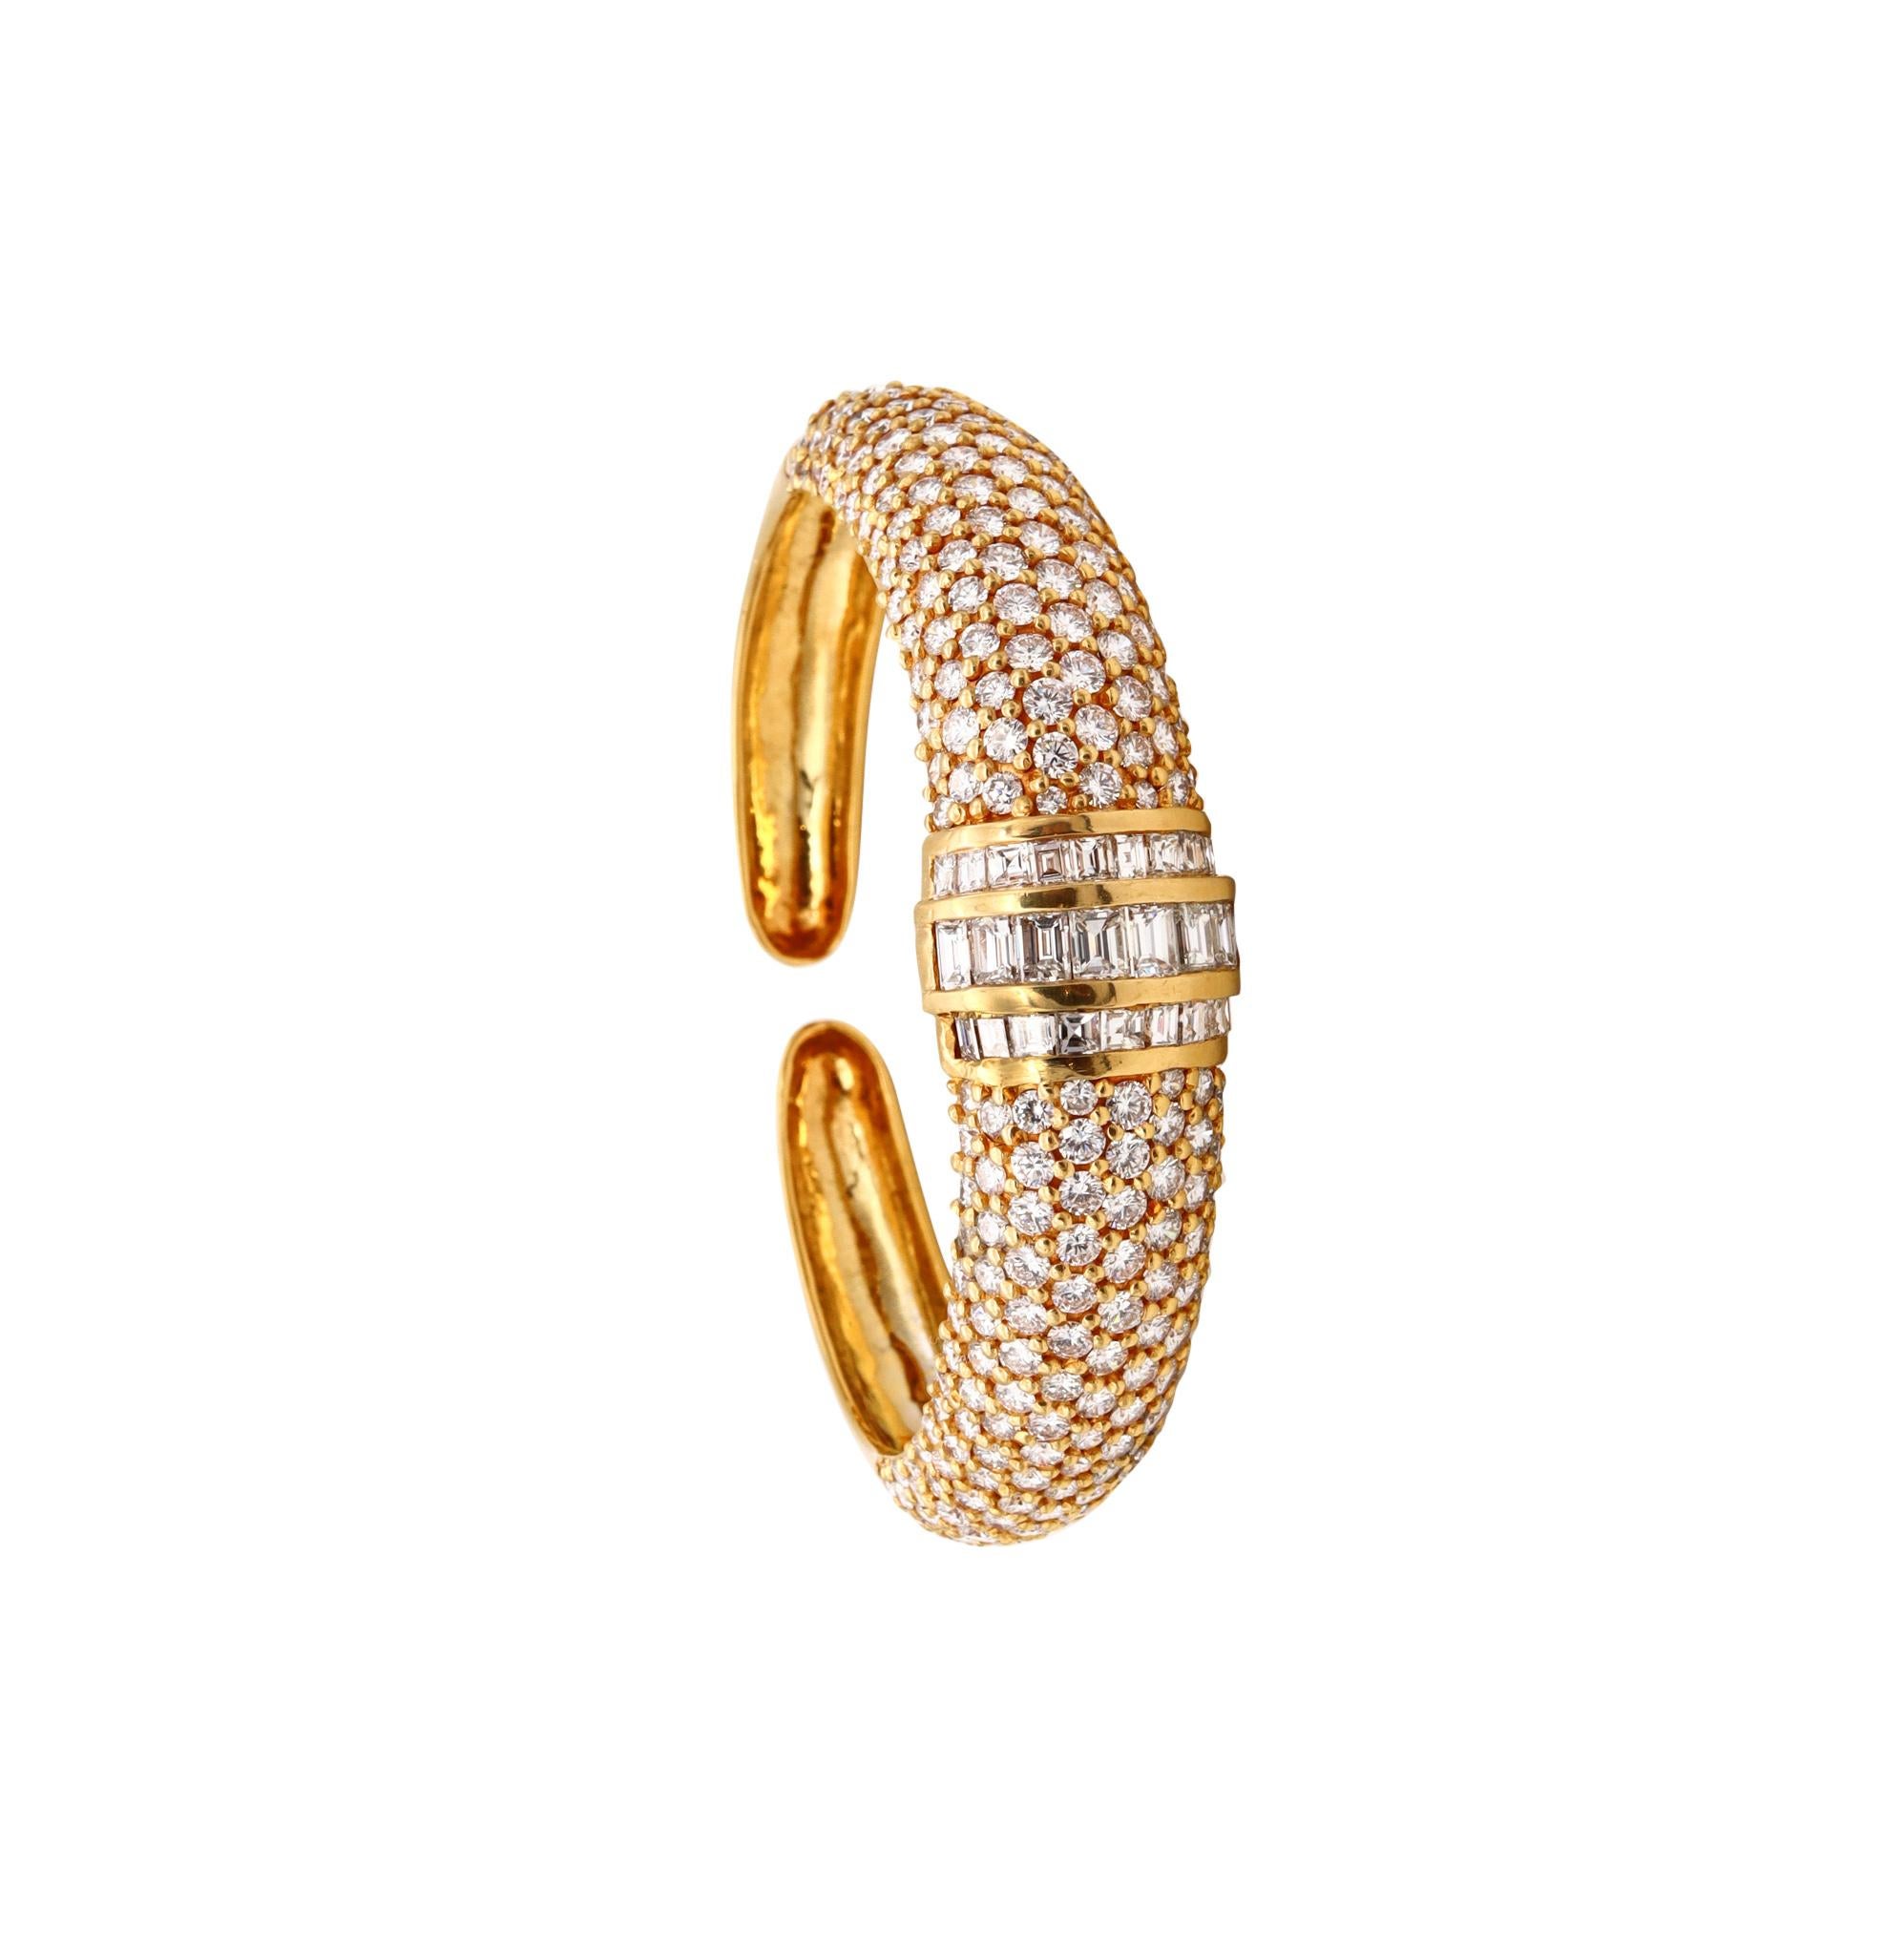 Exceptional Italian Designer Modern Bracelet in 18Kt Gold 21.12 Cts VS Diamonds For Sale 3